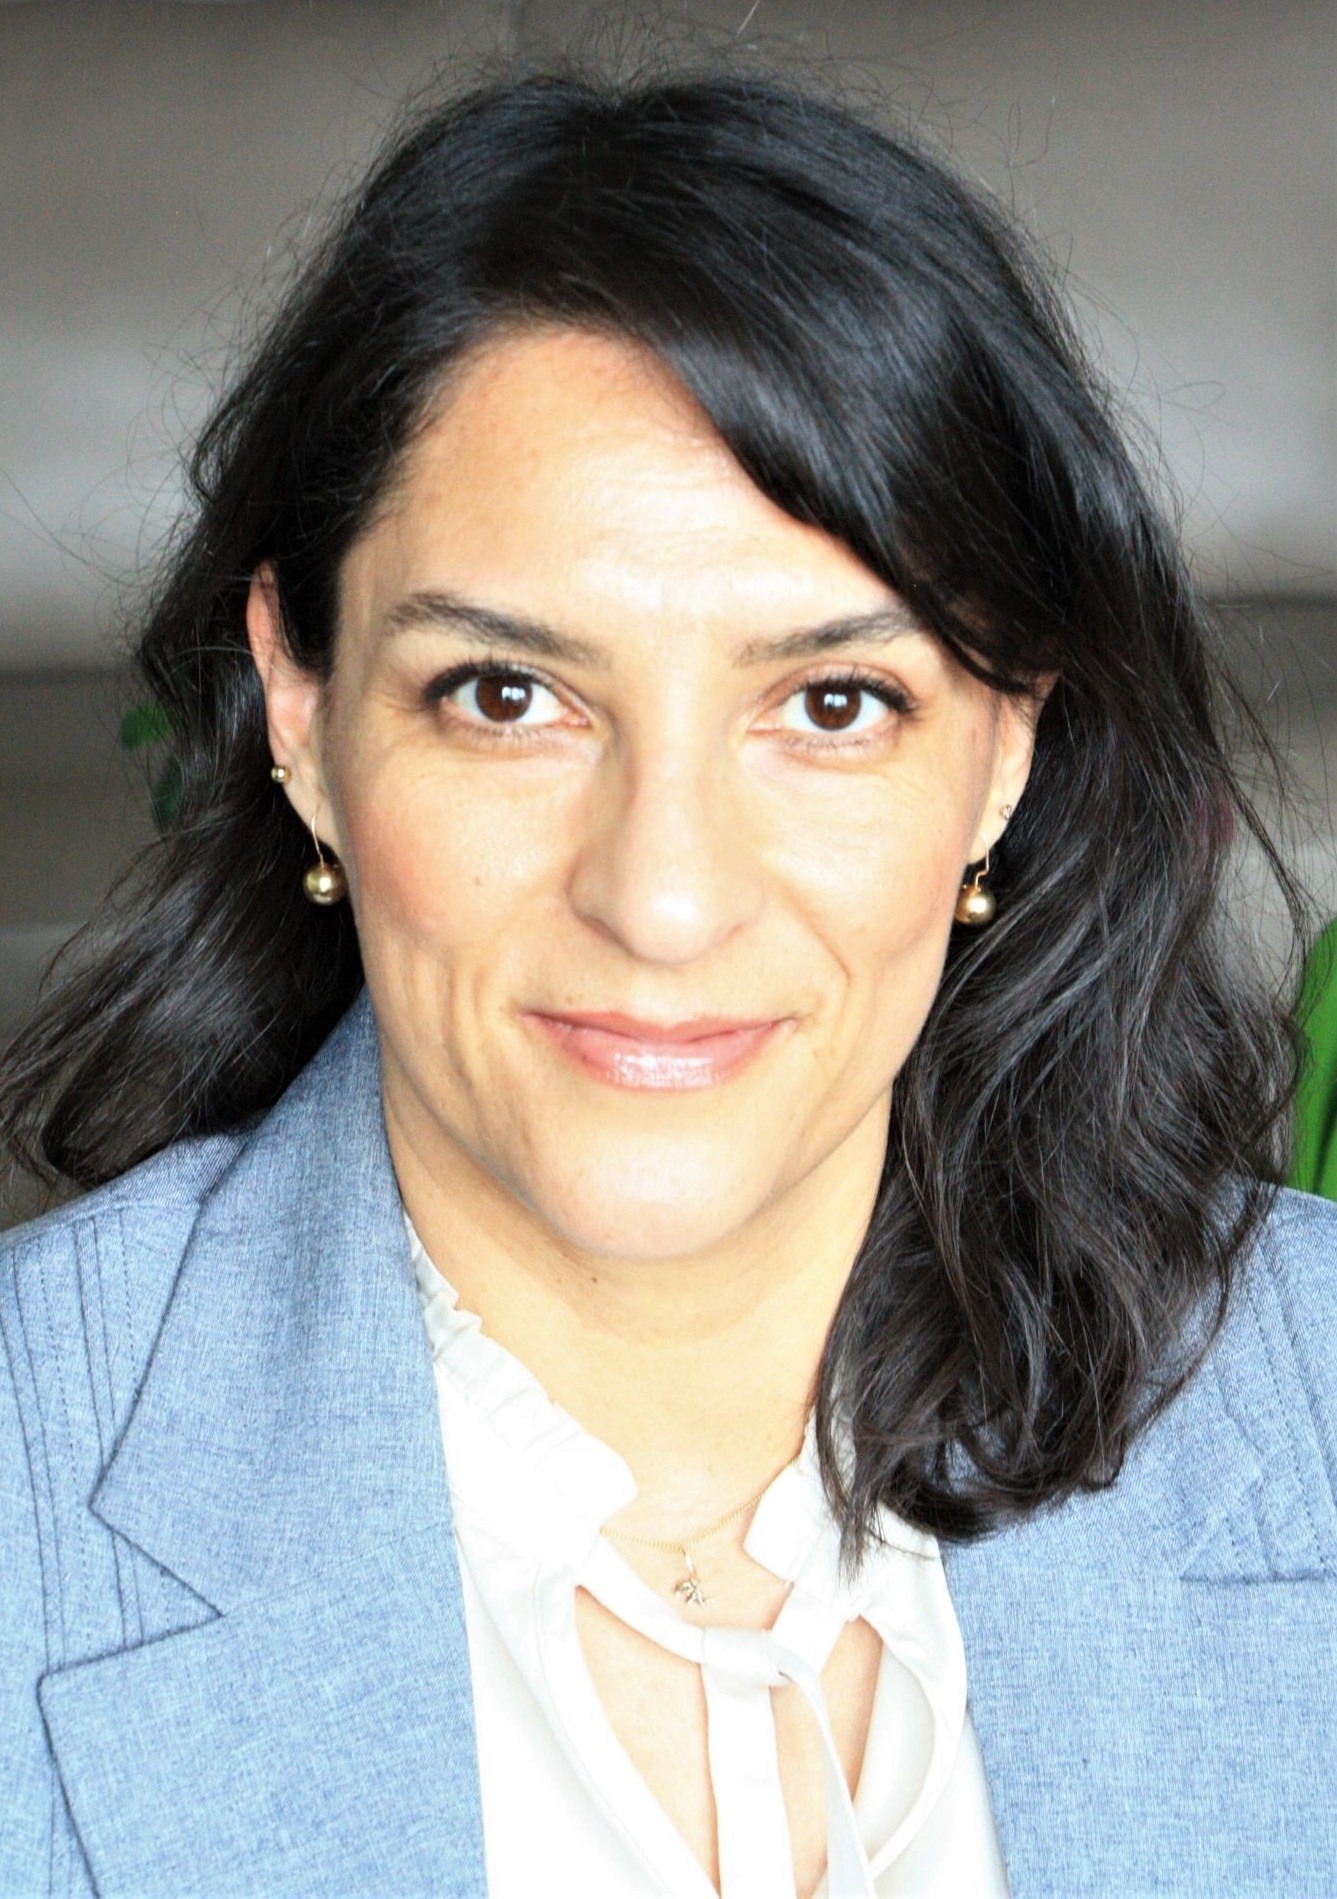 Dr. Noemi R. Ac, TCMD